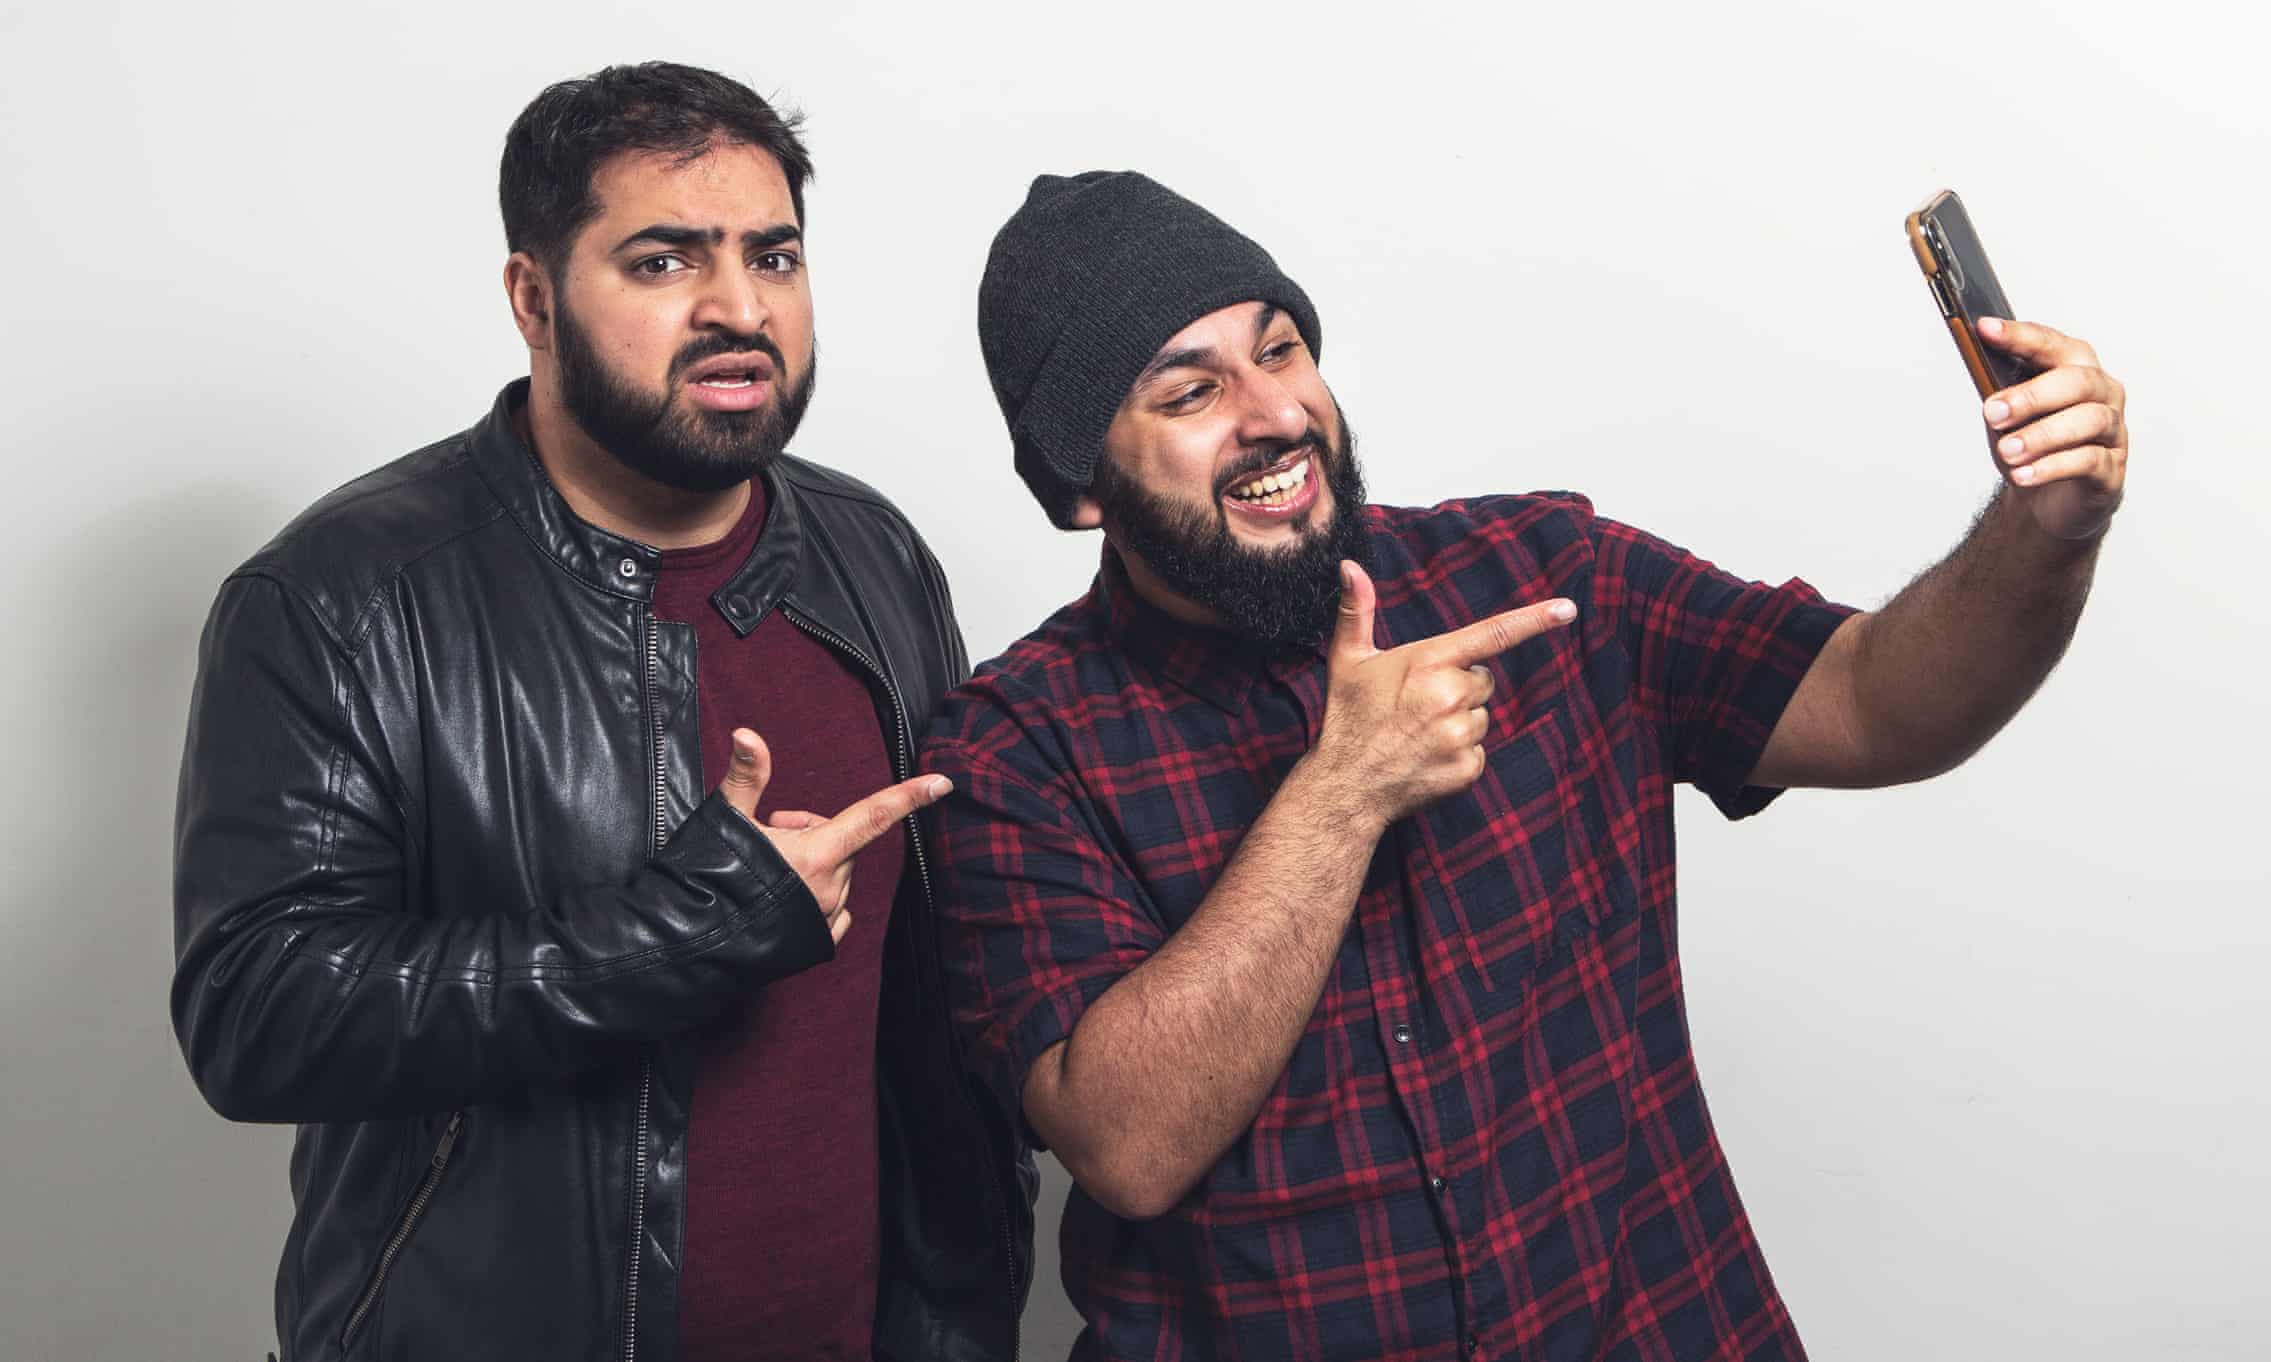 British Muslim comedians